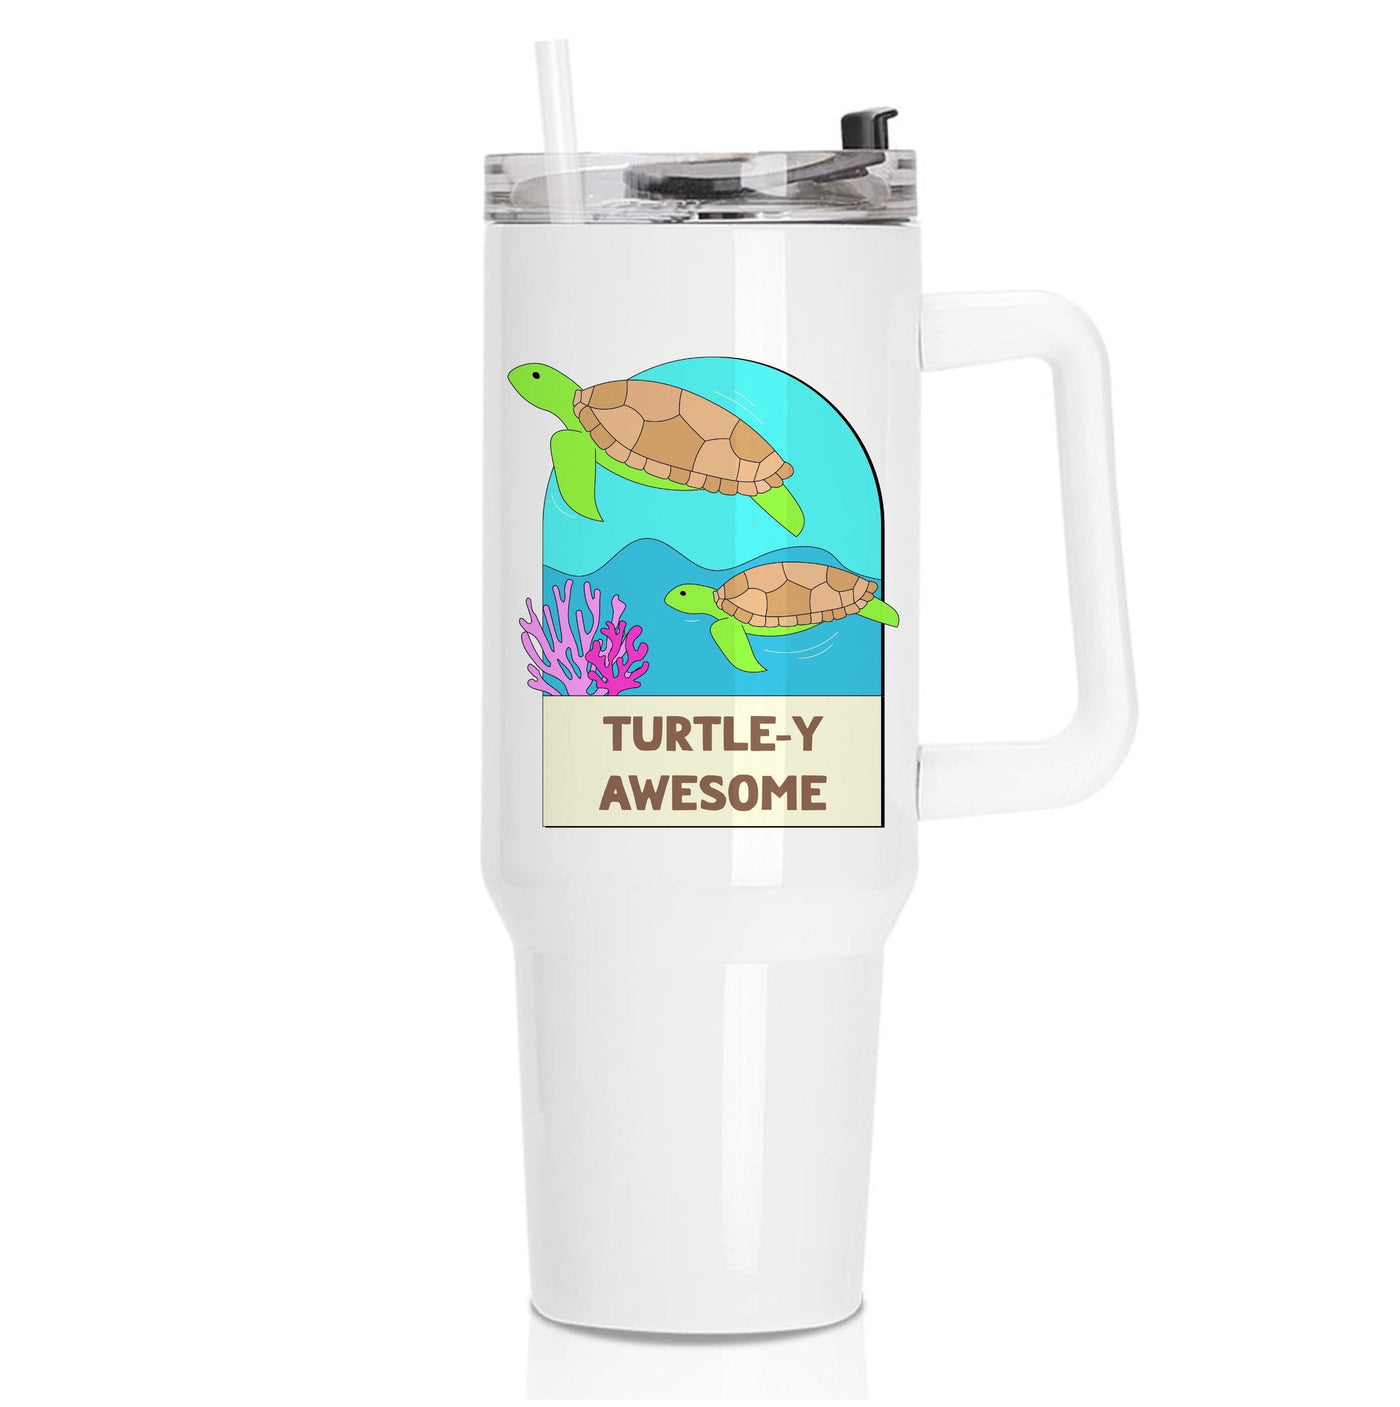 Turtle-y Awesome - Sealife Tumbler